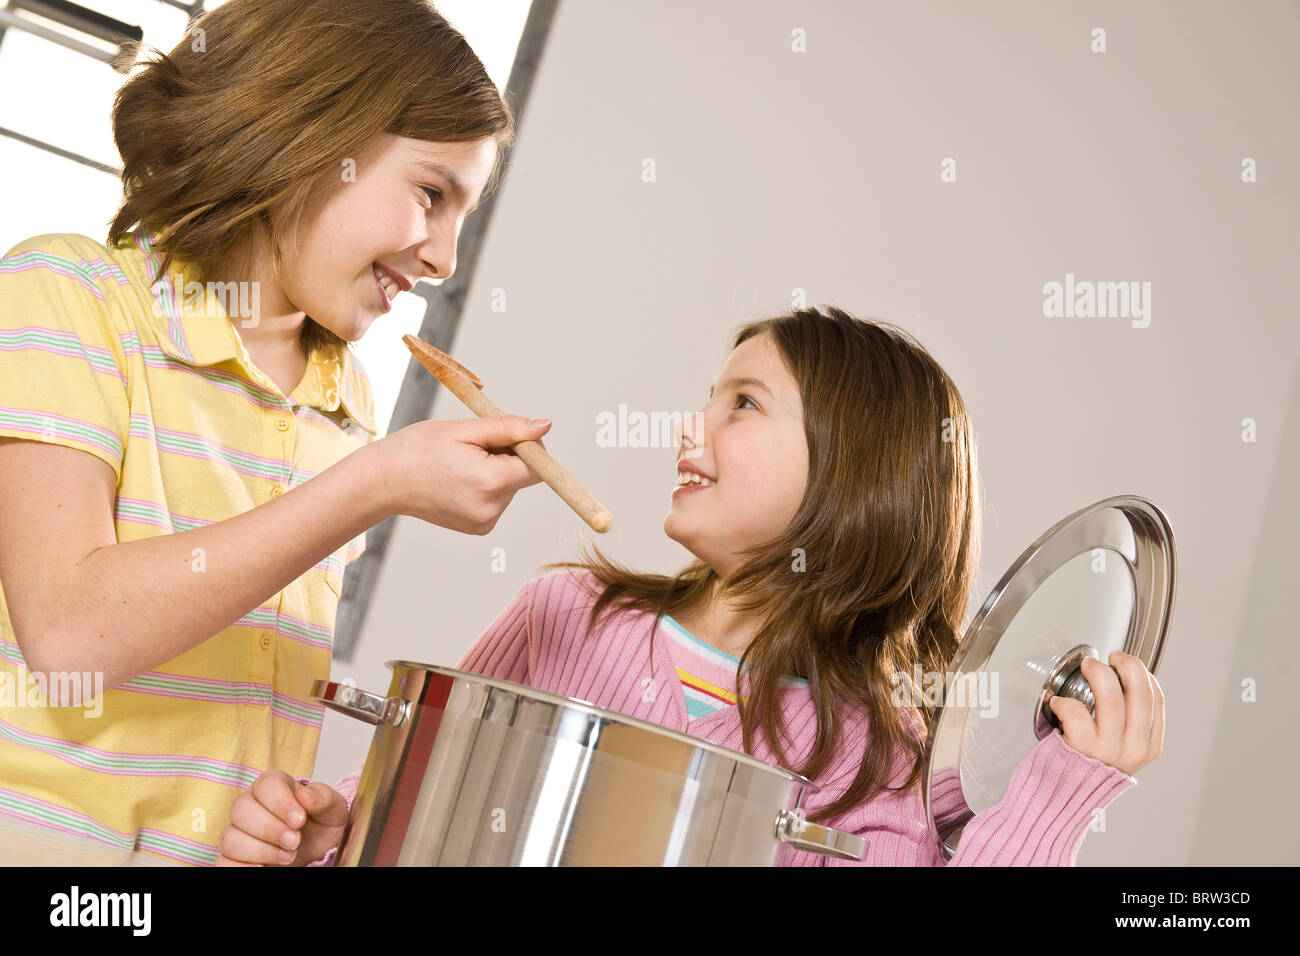 Two girls having fun while cooking Stock Photo